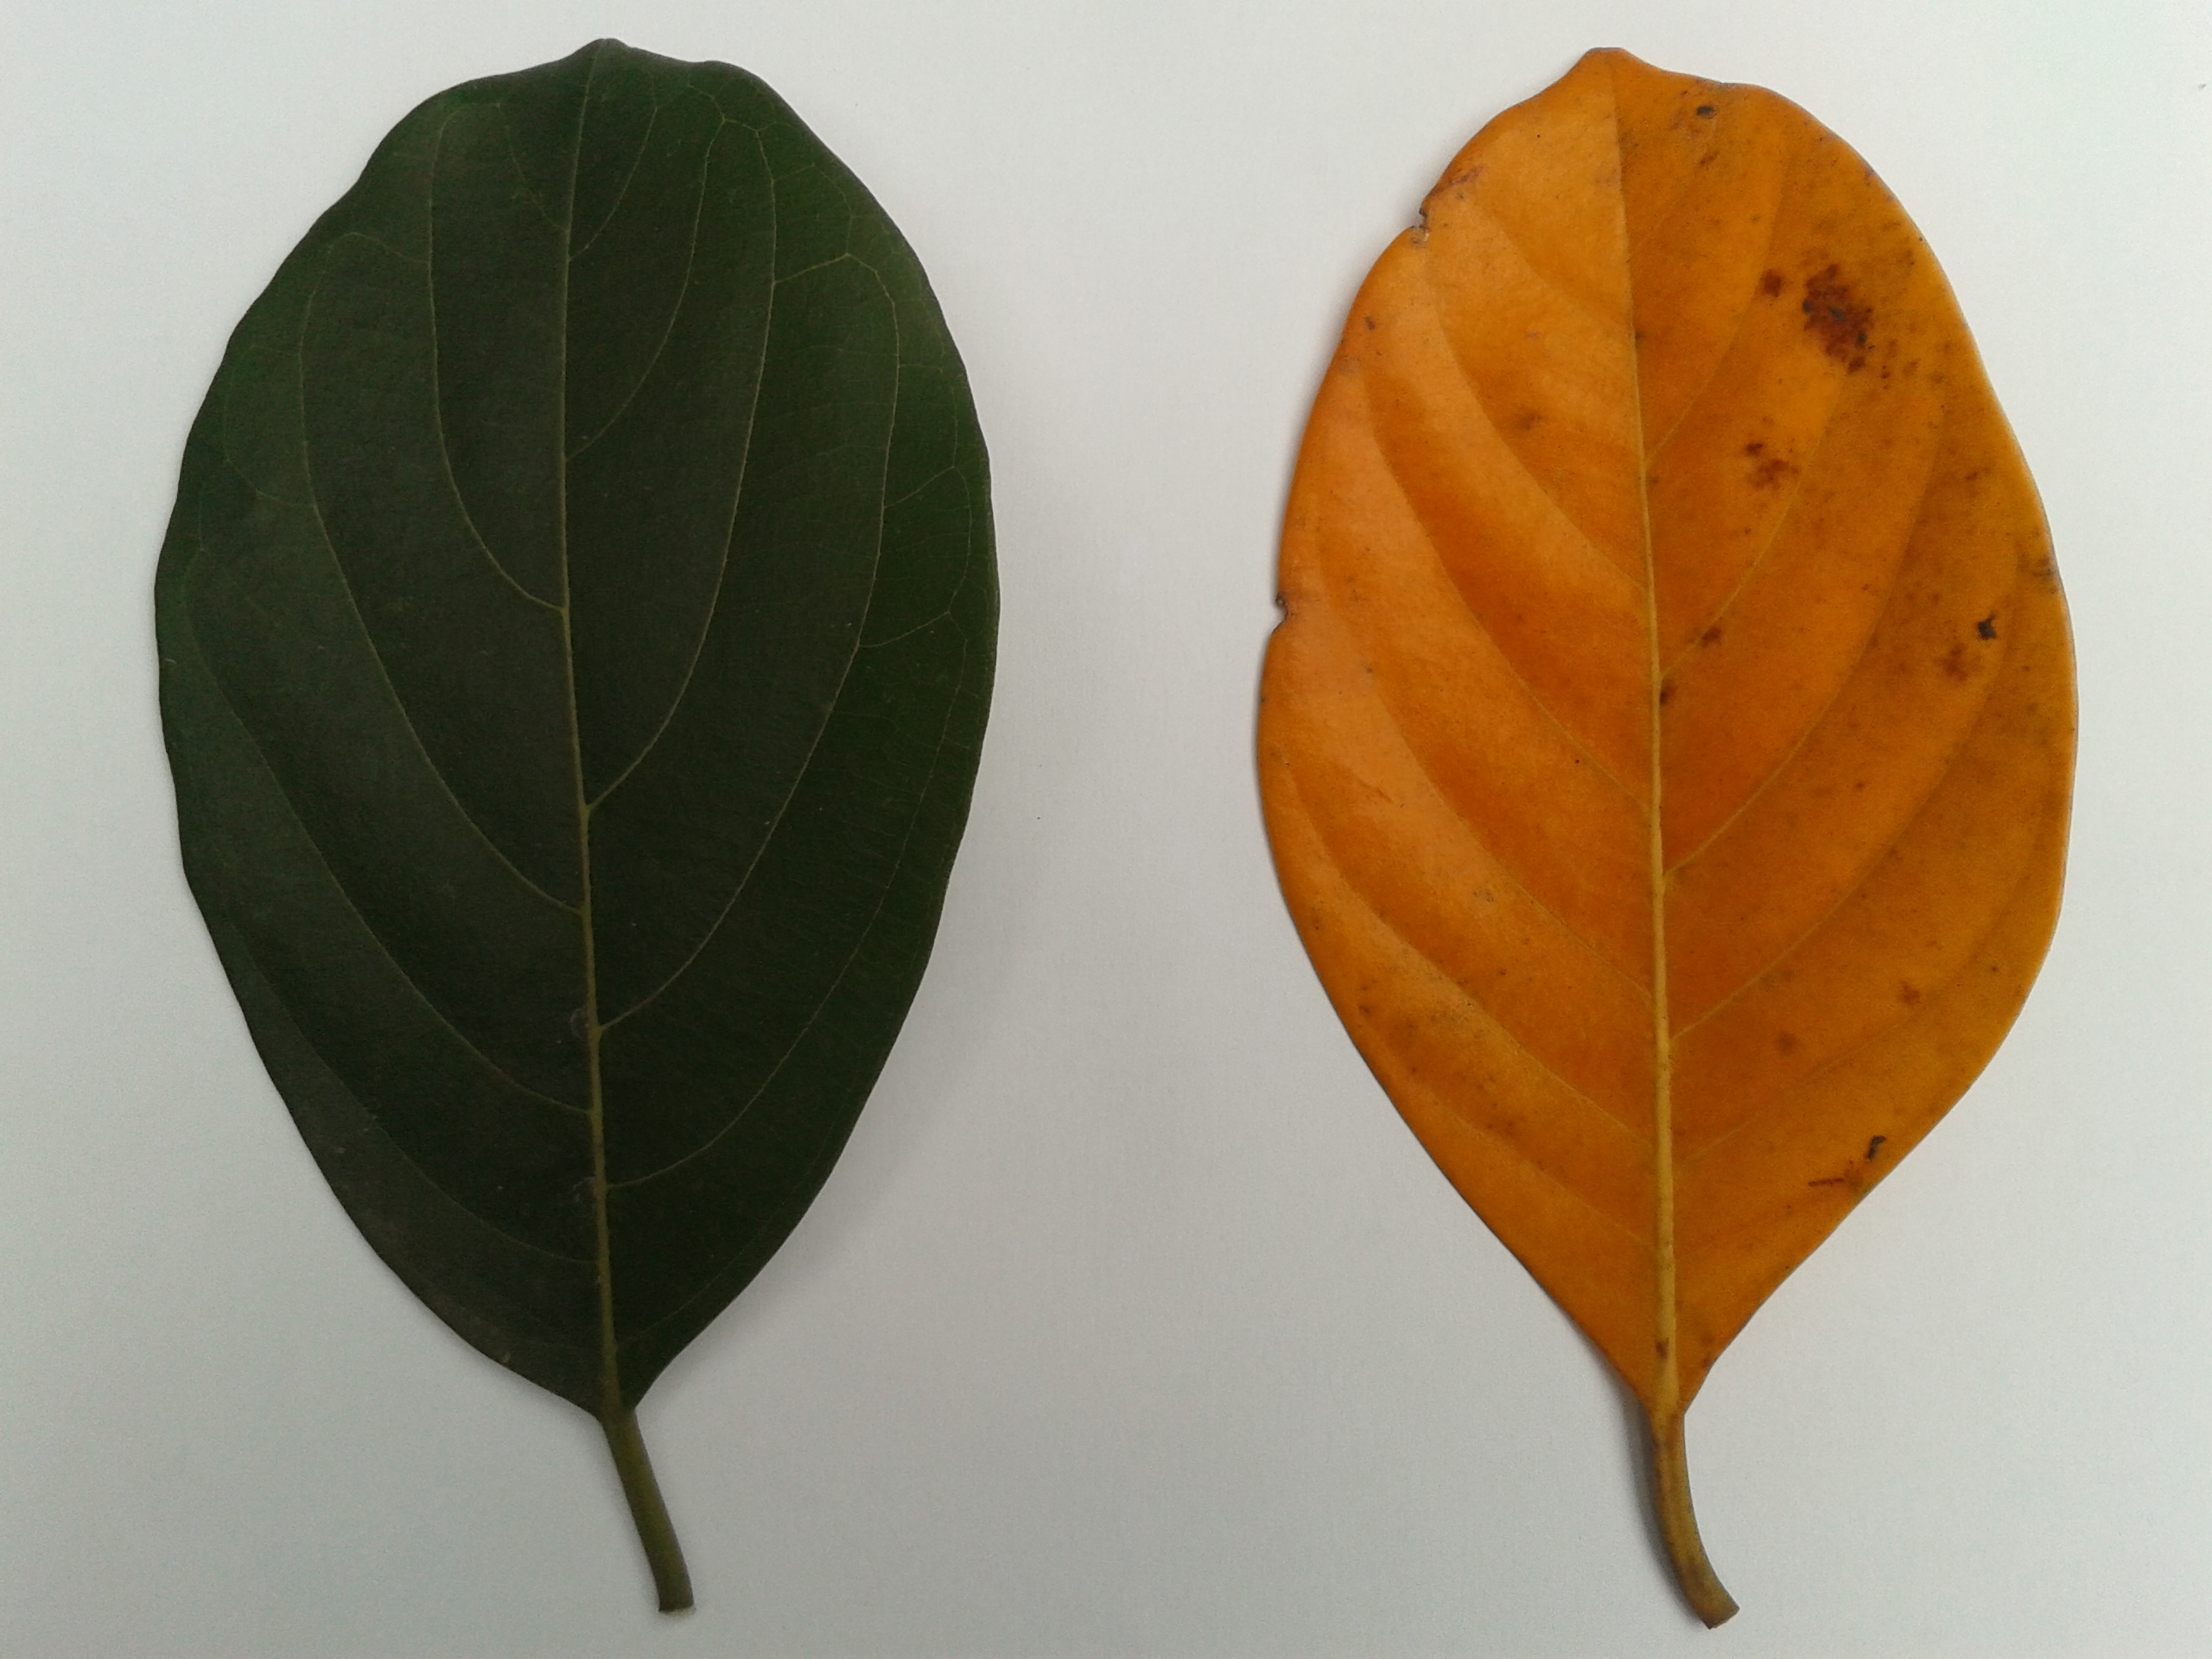 File:Jackfruit green leaf and dead leaf.jpg - Wikimedia Commons